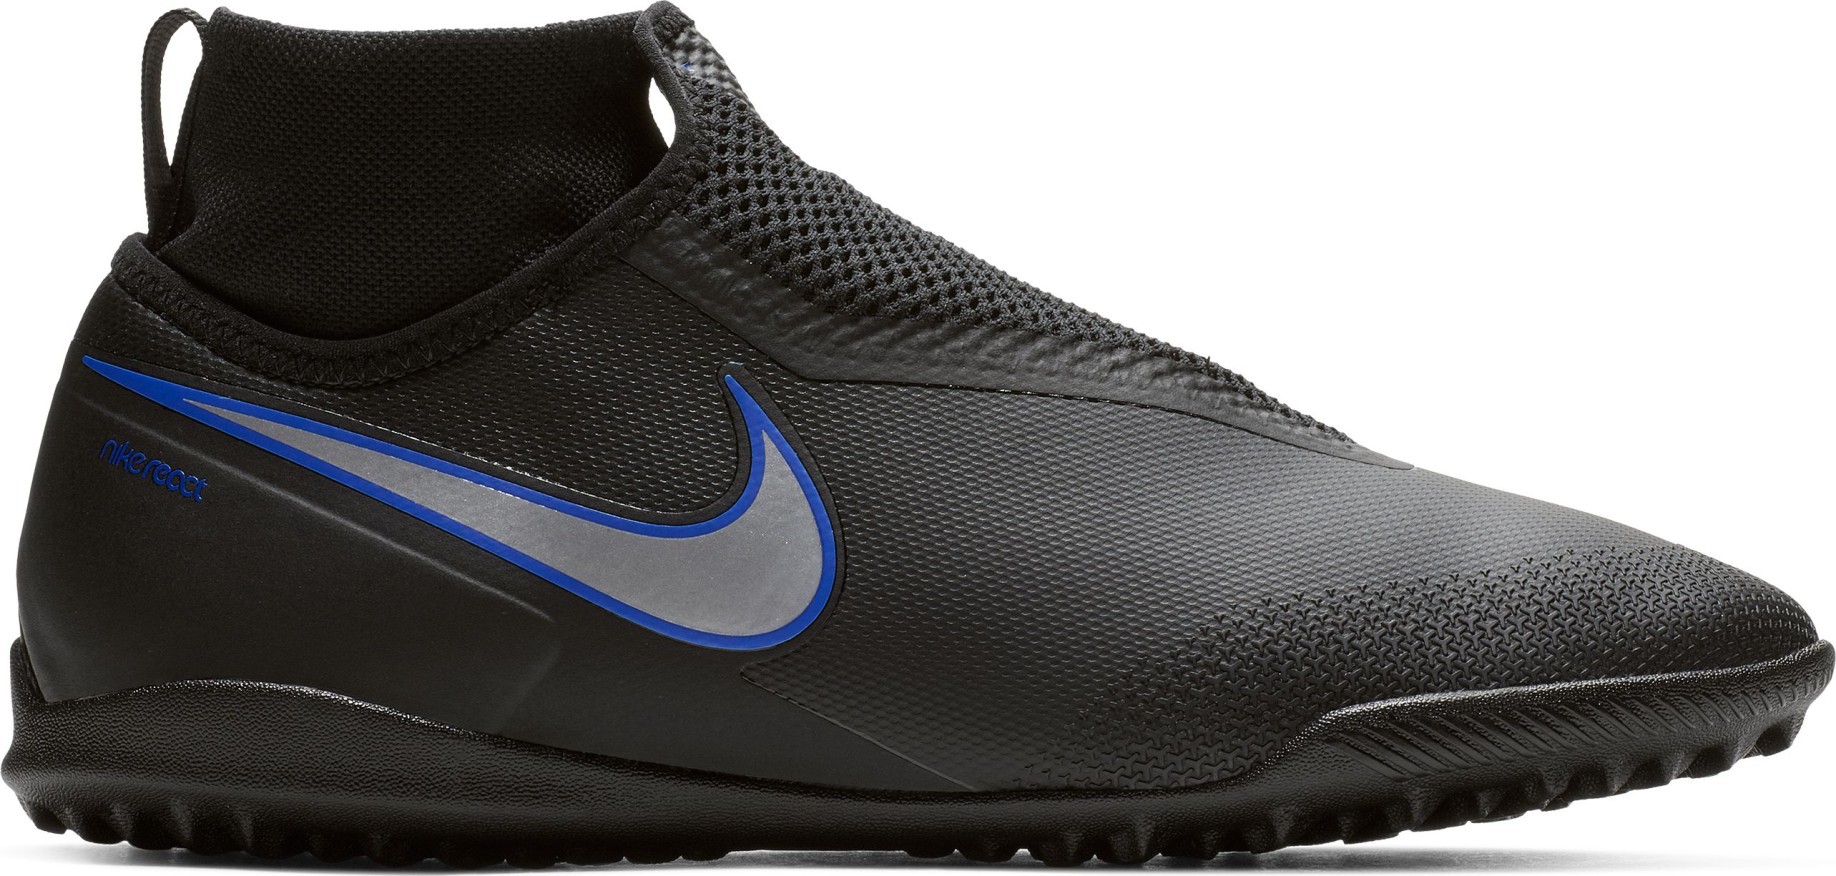 Zapatos de Fútbol Nike Fantasma Reaccionar Pro TF Siempre hacia Adelante Pack negro azul - Nike - SportIT.com